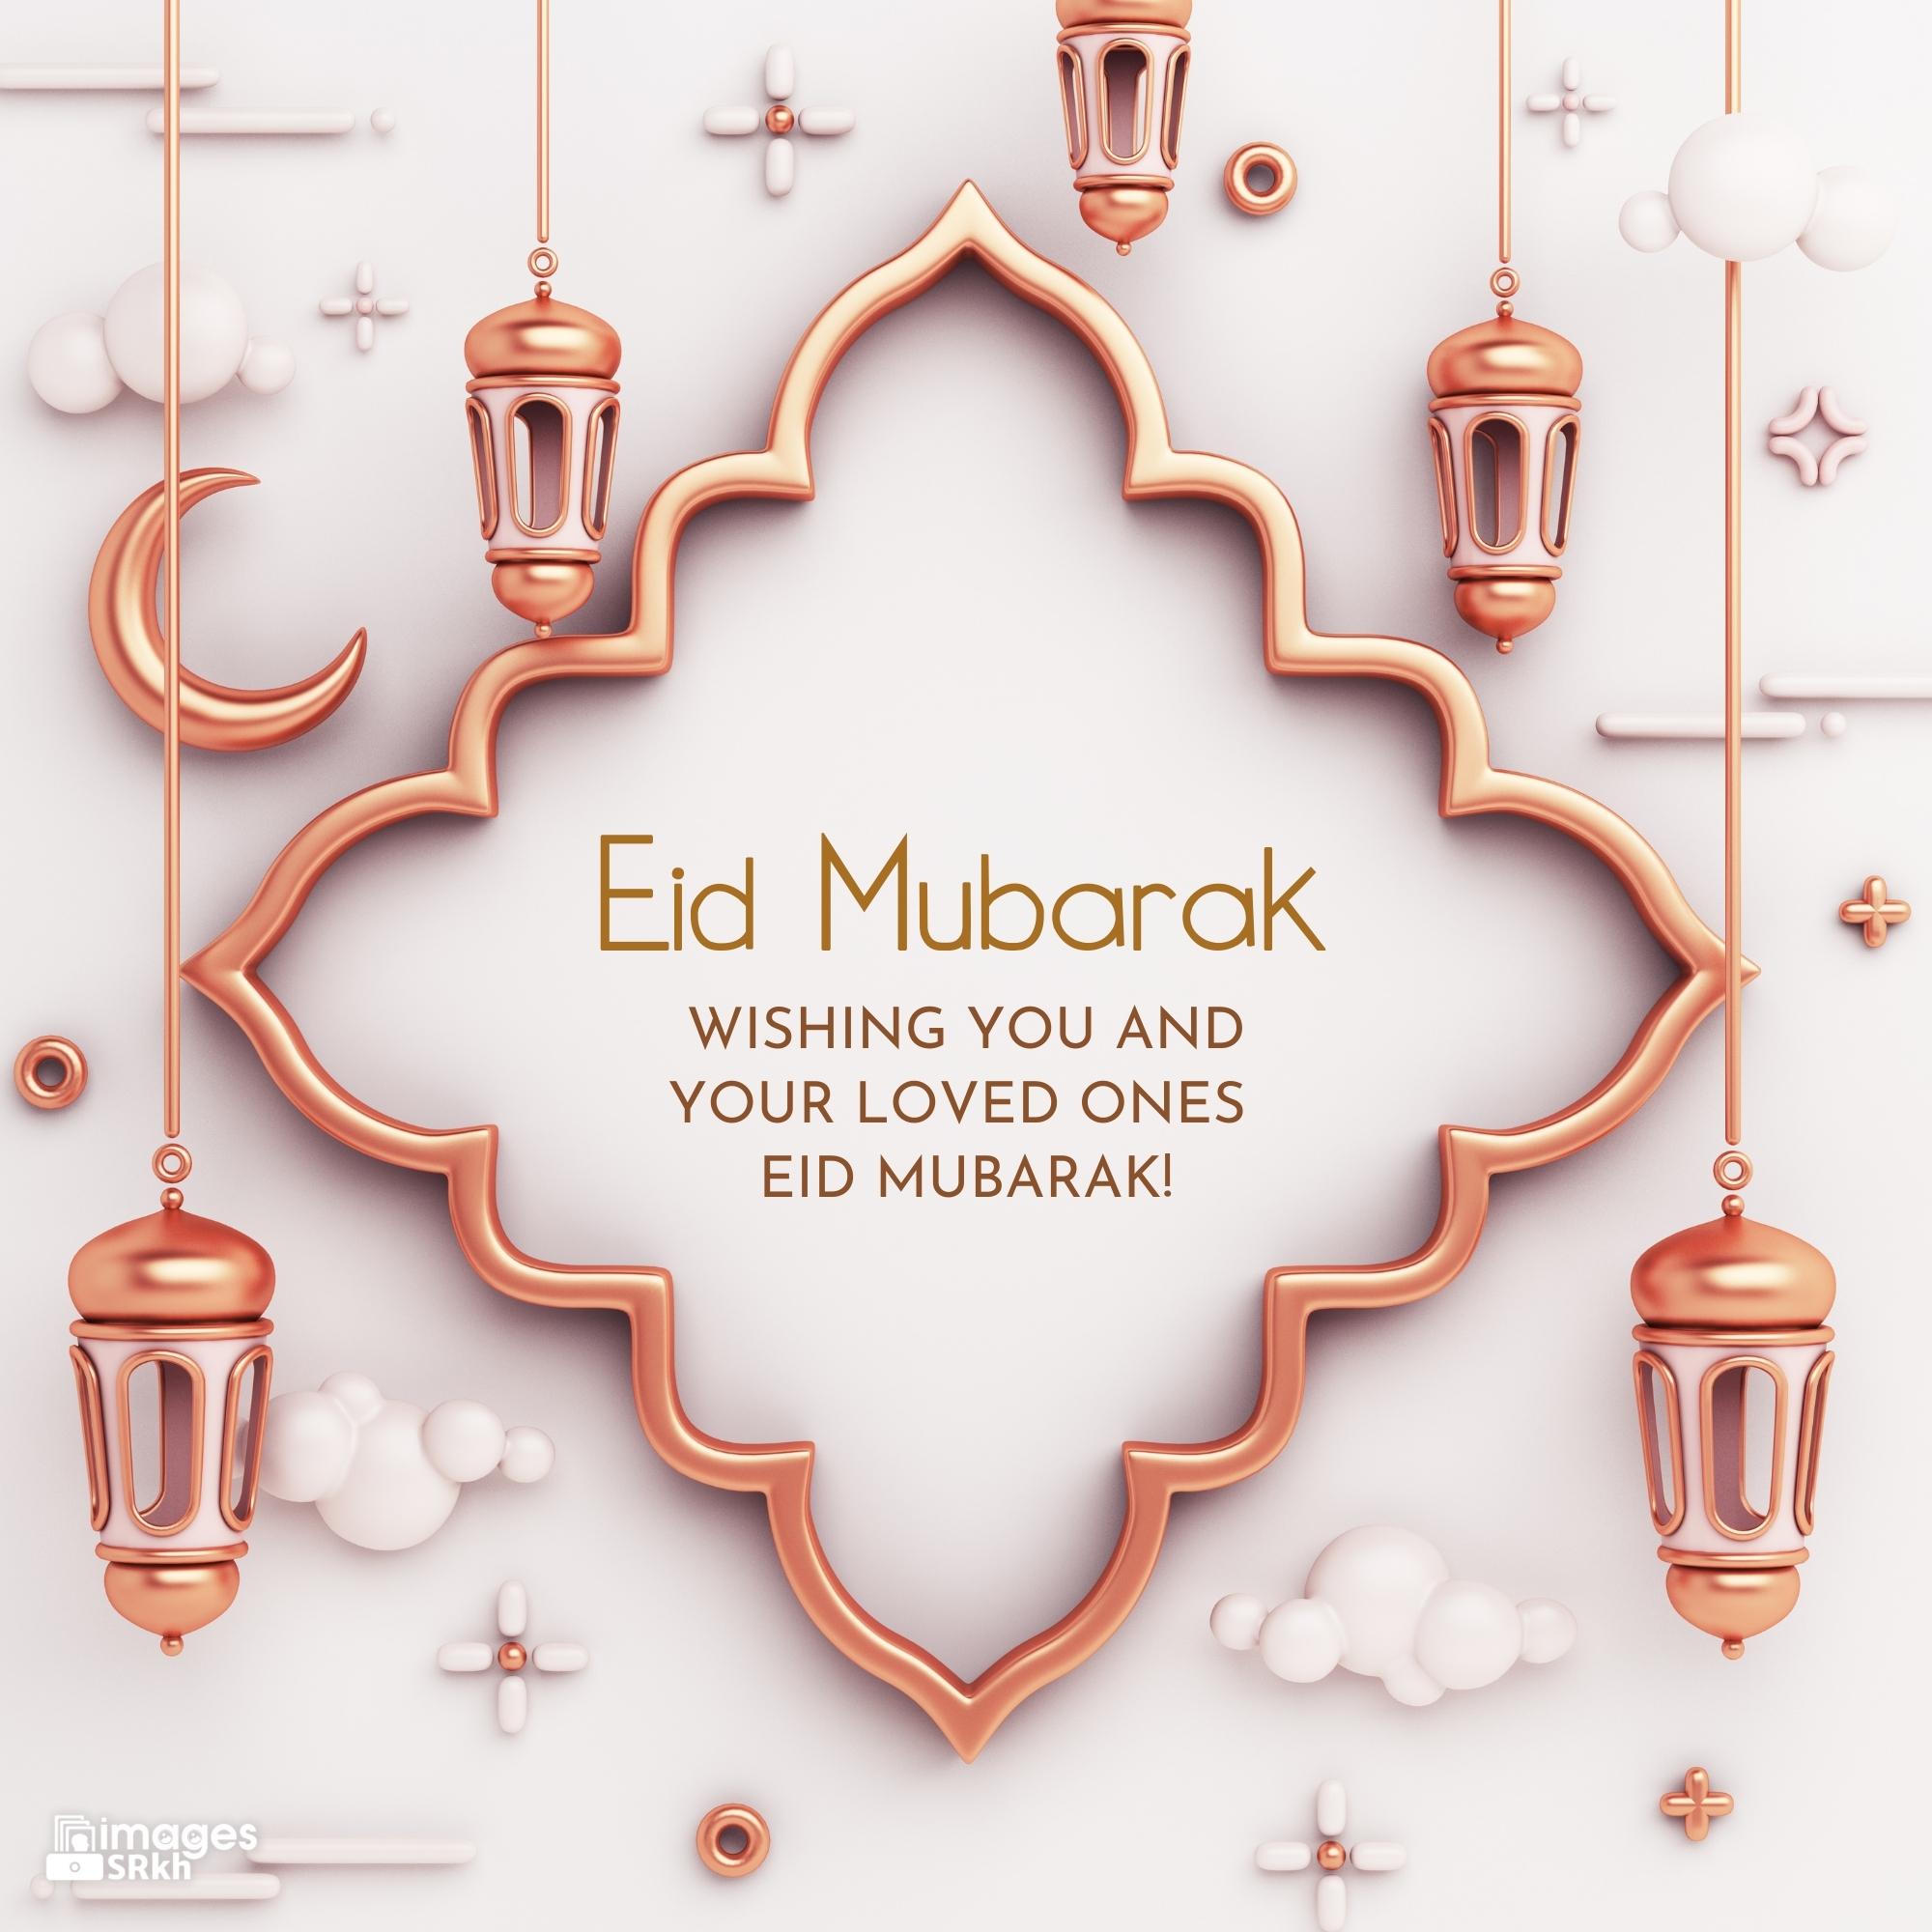 Pics Of Eid Mubarak | Download free in Hd Quality | imagesSRkh